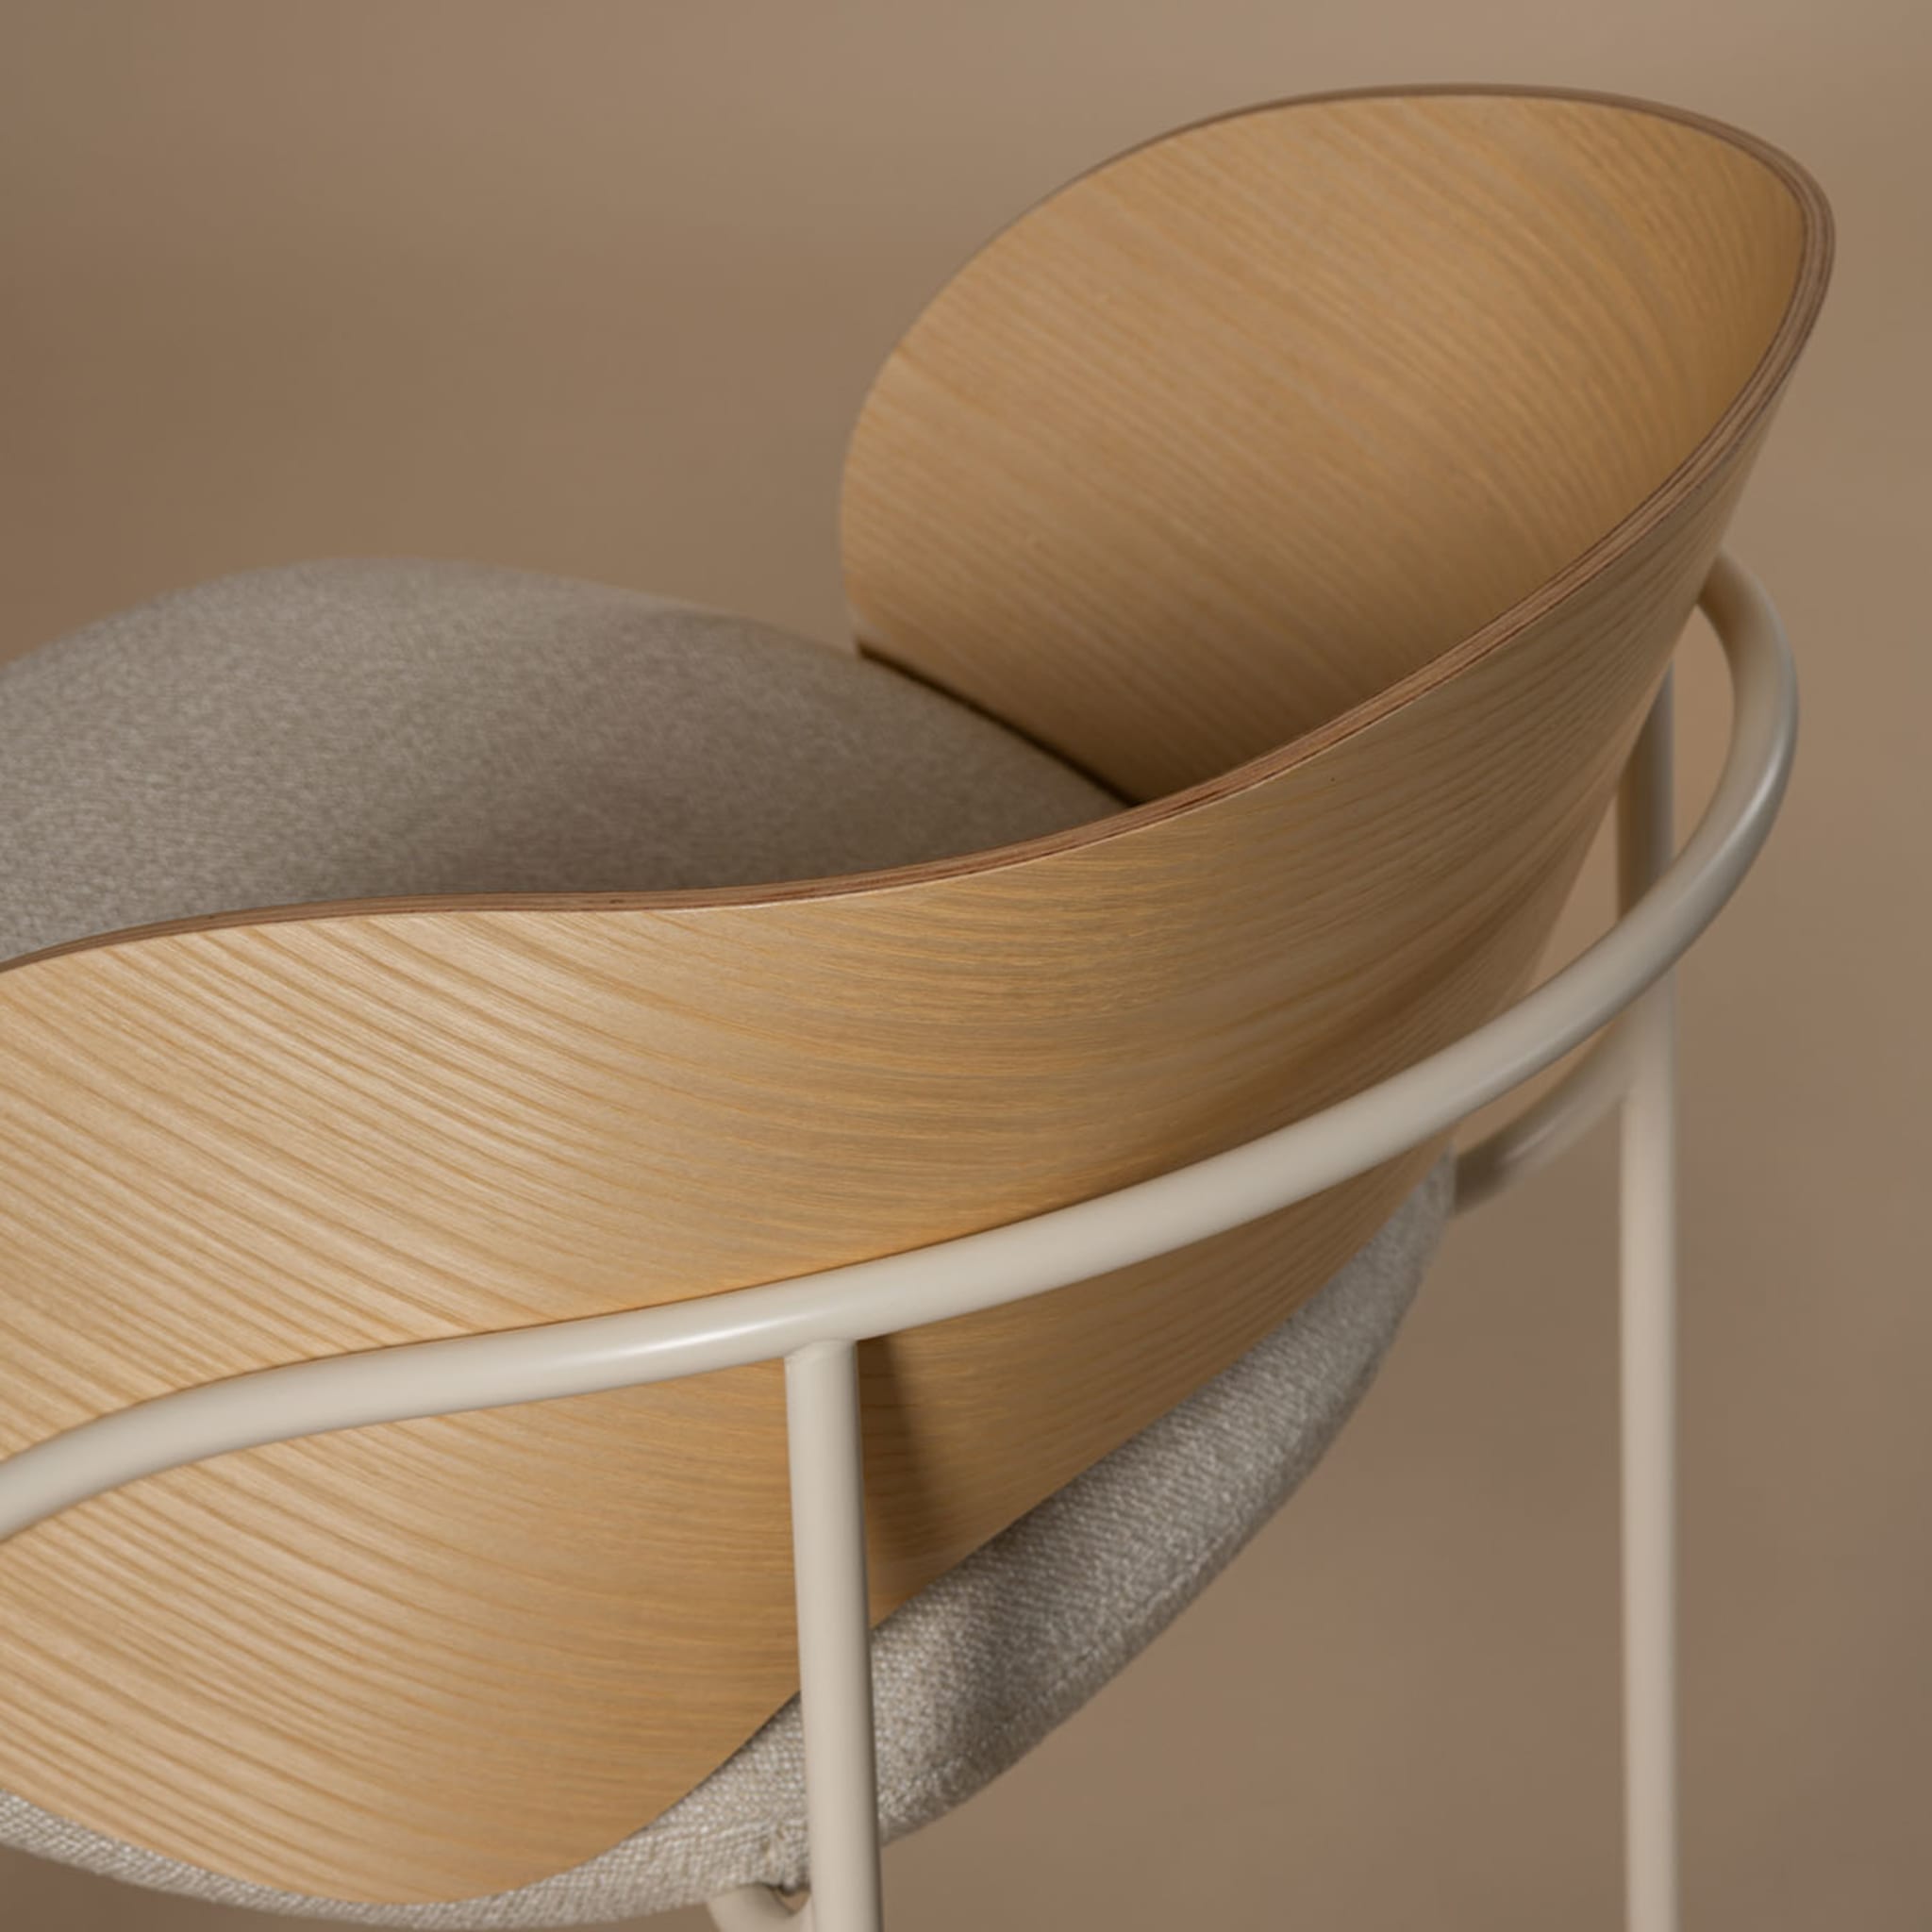 Hagu Chair by Ed Ng, AB Concept - Alternative view 3